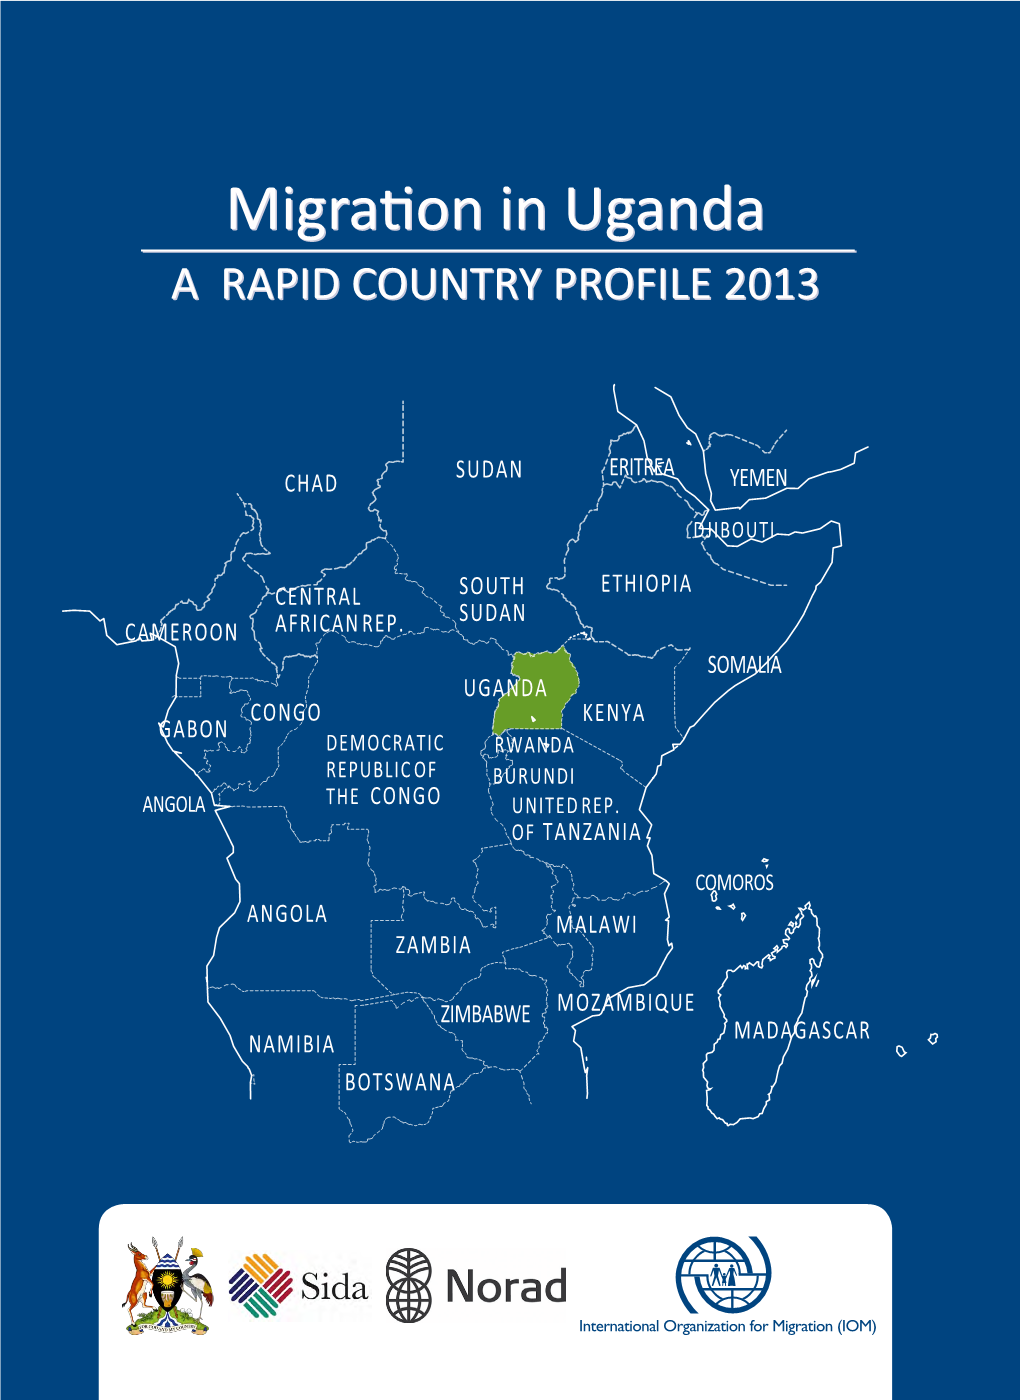 Migration in Uganda a RAPID COUNTRY PROFILE 2013